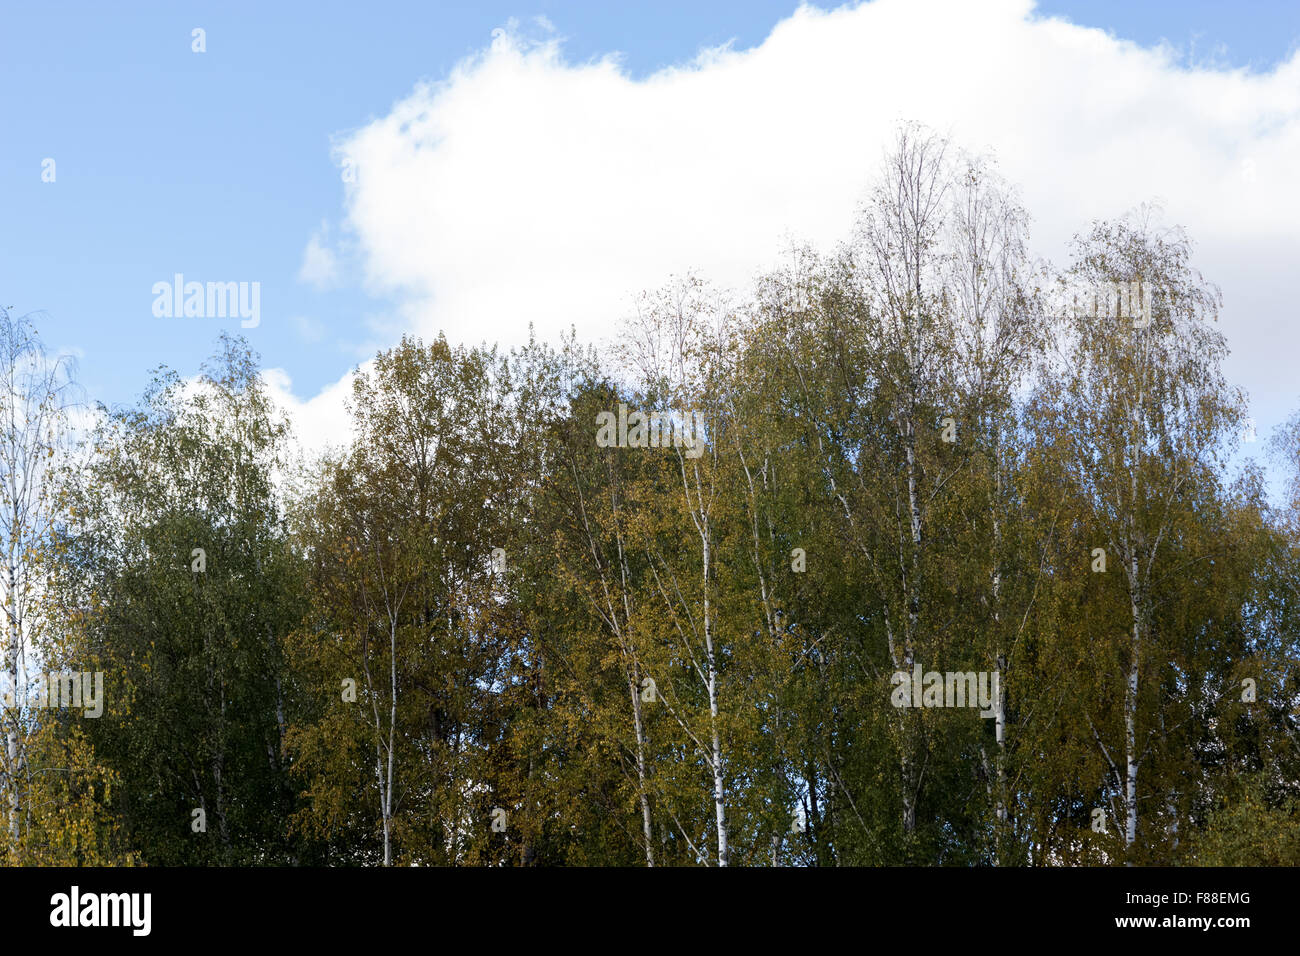 Wipfel der Bäume gegen den blauen bewölkten Himmel im Frühherbst Stockfoto